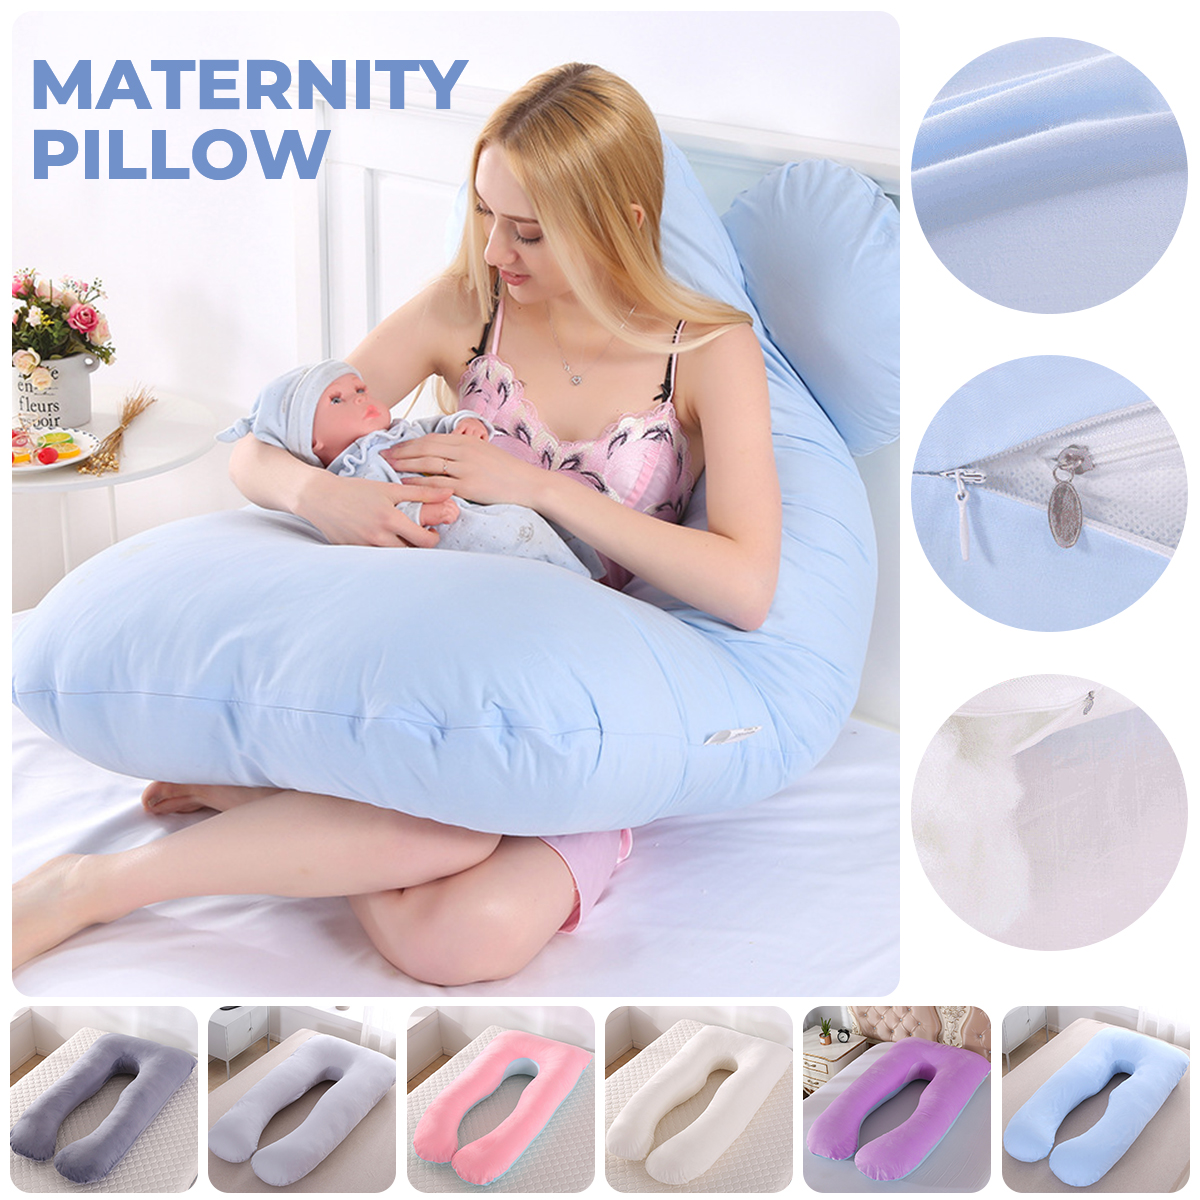 Pillow-Breastfeeding-Pillow-Cushion-For-Women-Sleep-1960438-2